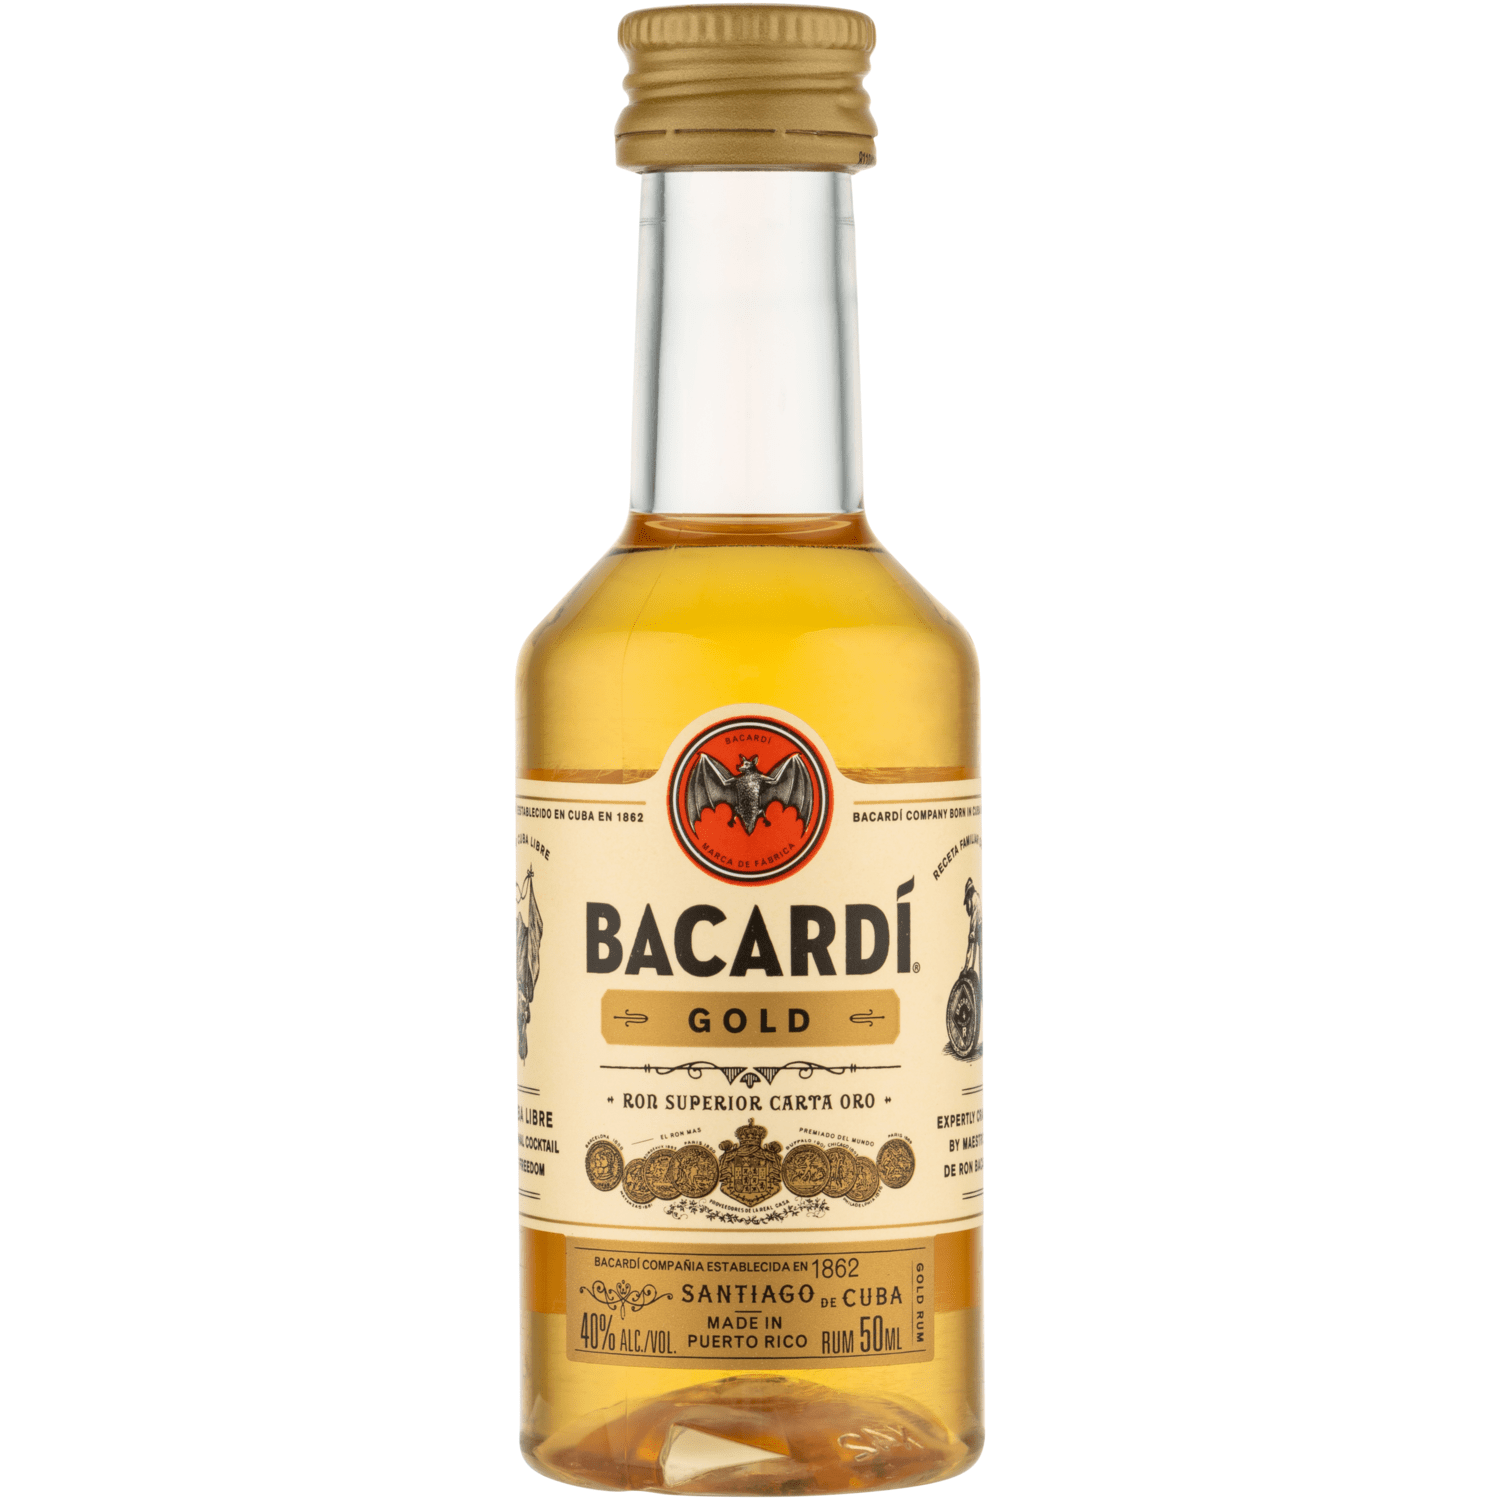 Bacardi Gold Rum - 50 ml bottle